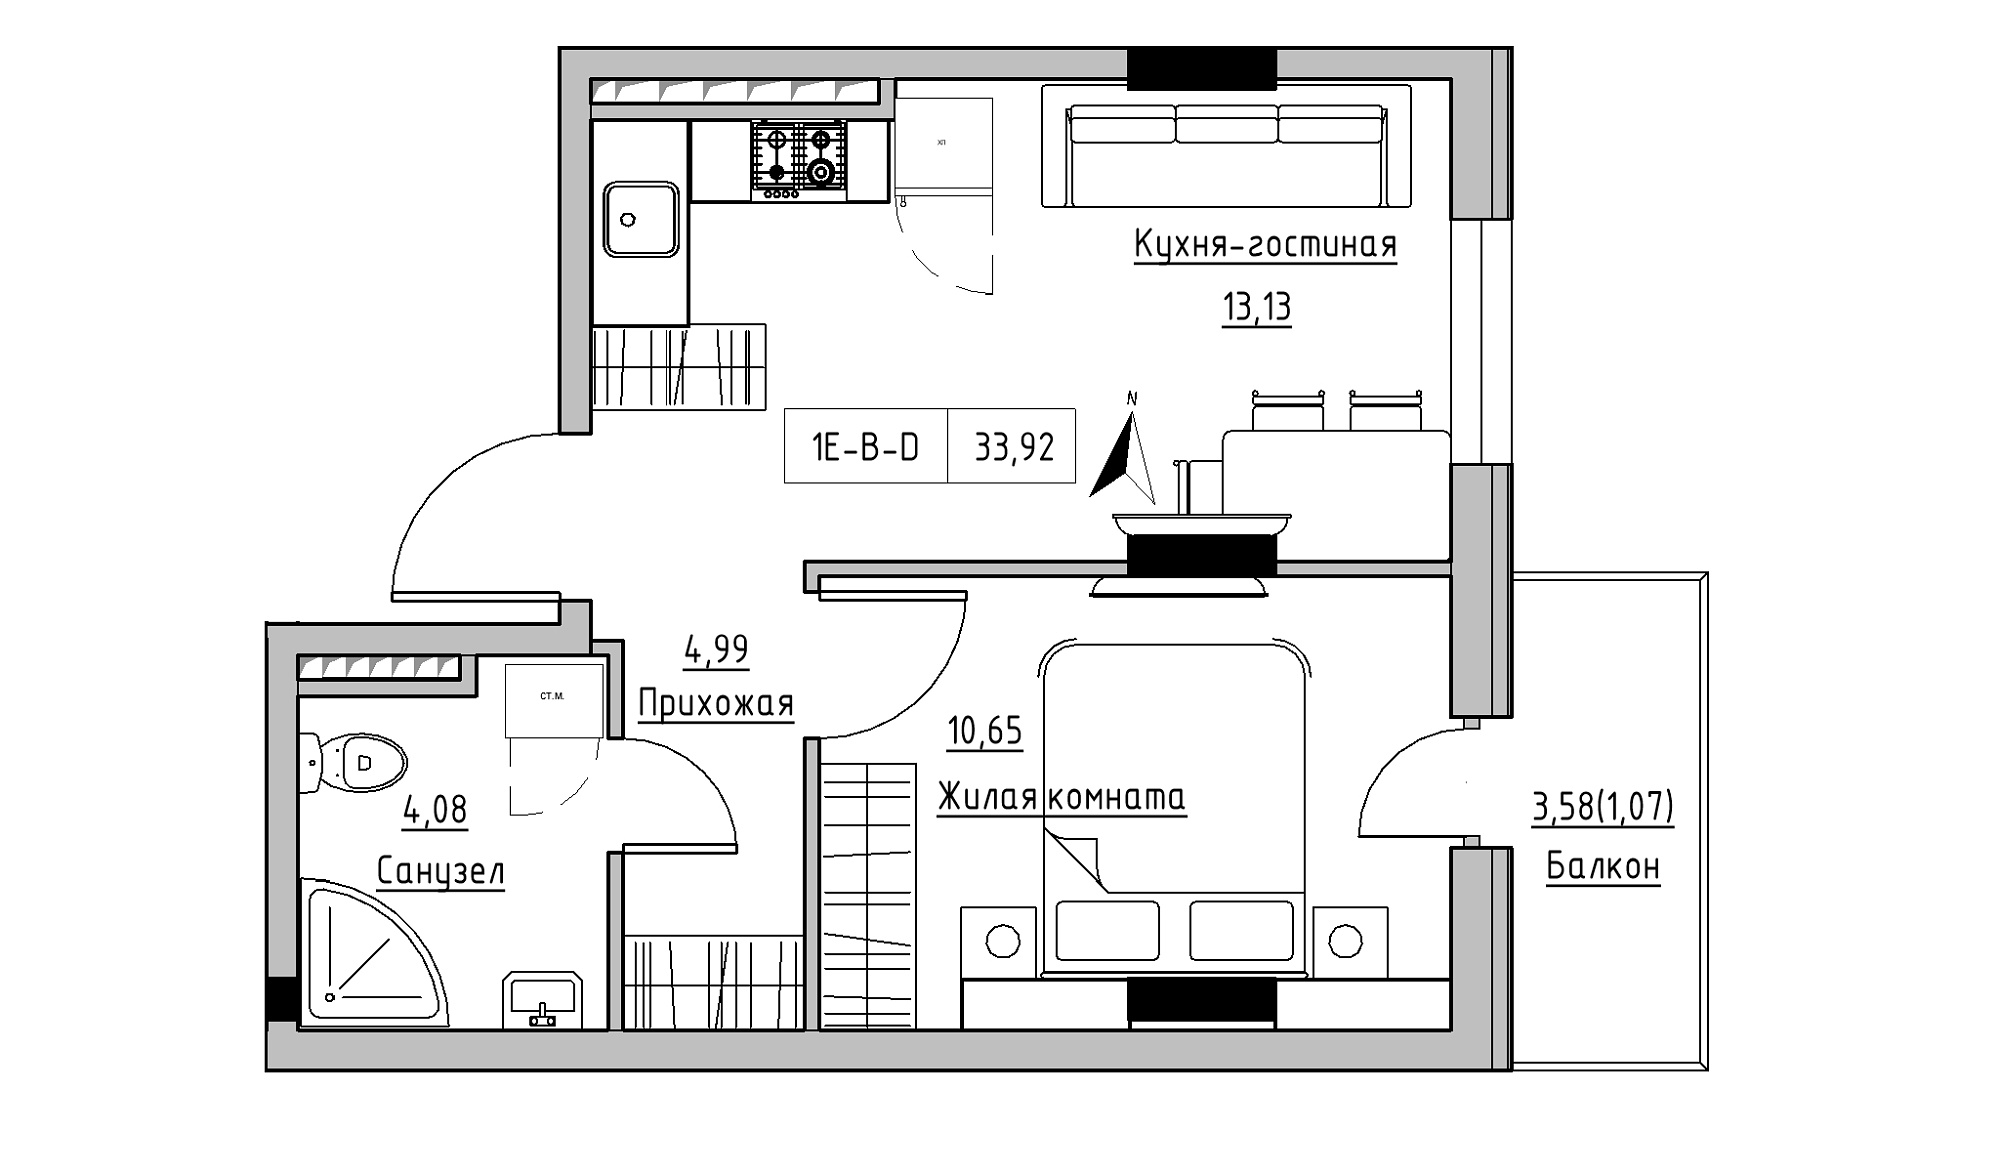 Planning 1-rm flats area 33.92m2, KS-025-05/0002.